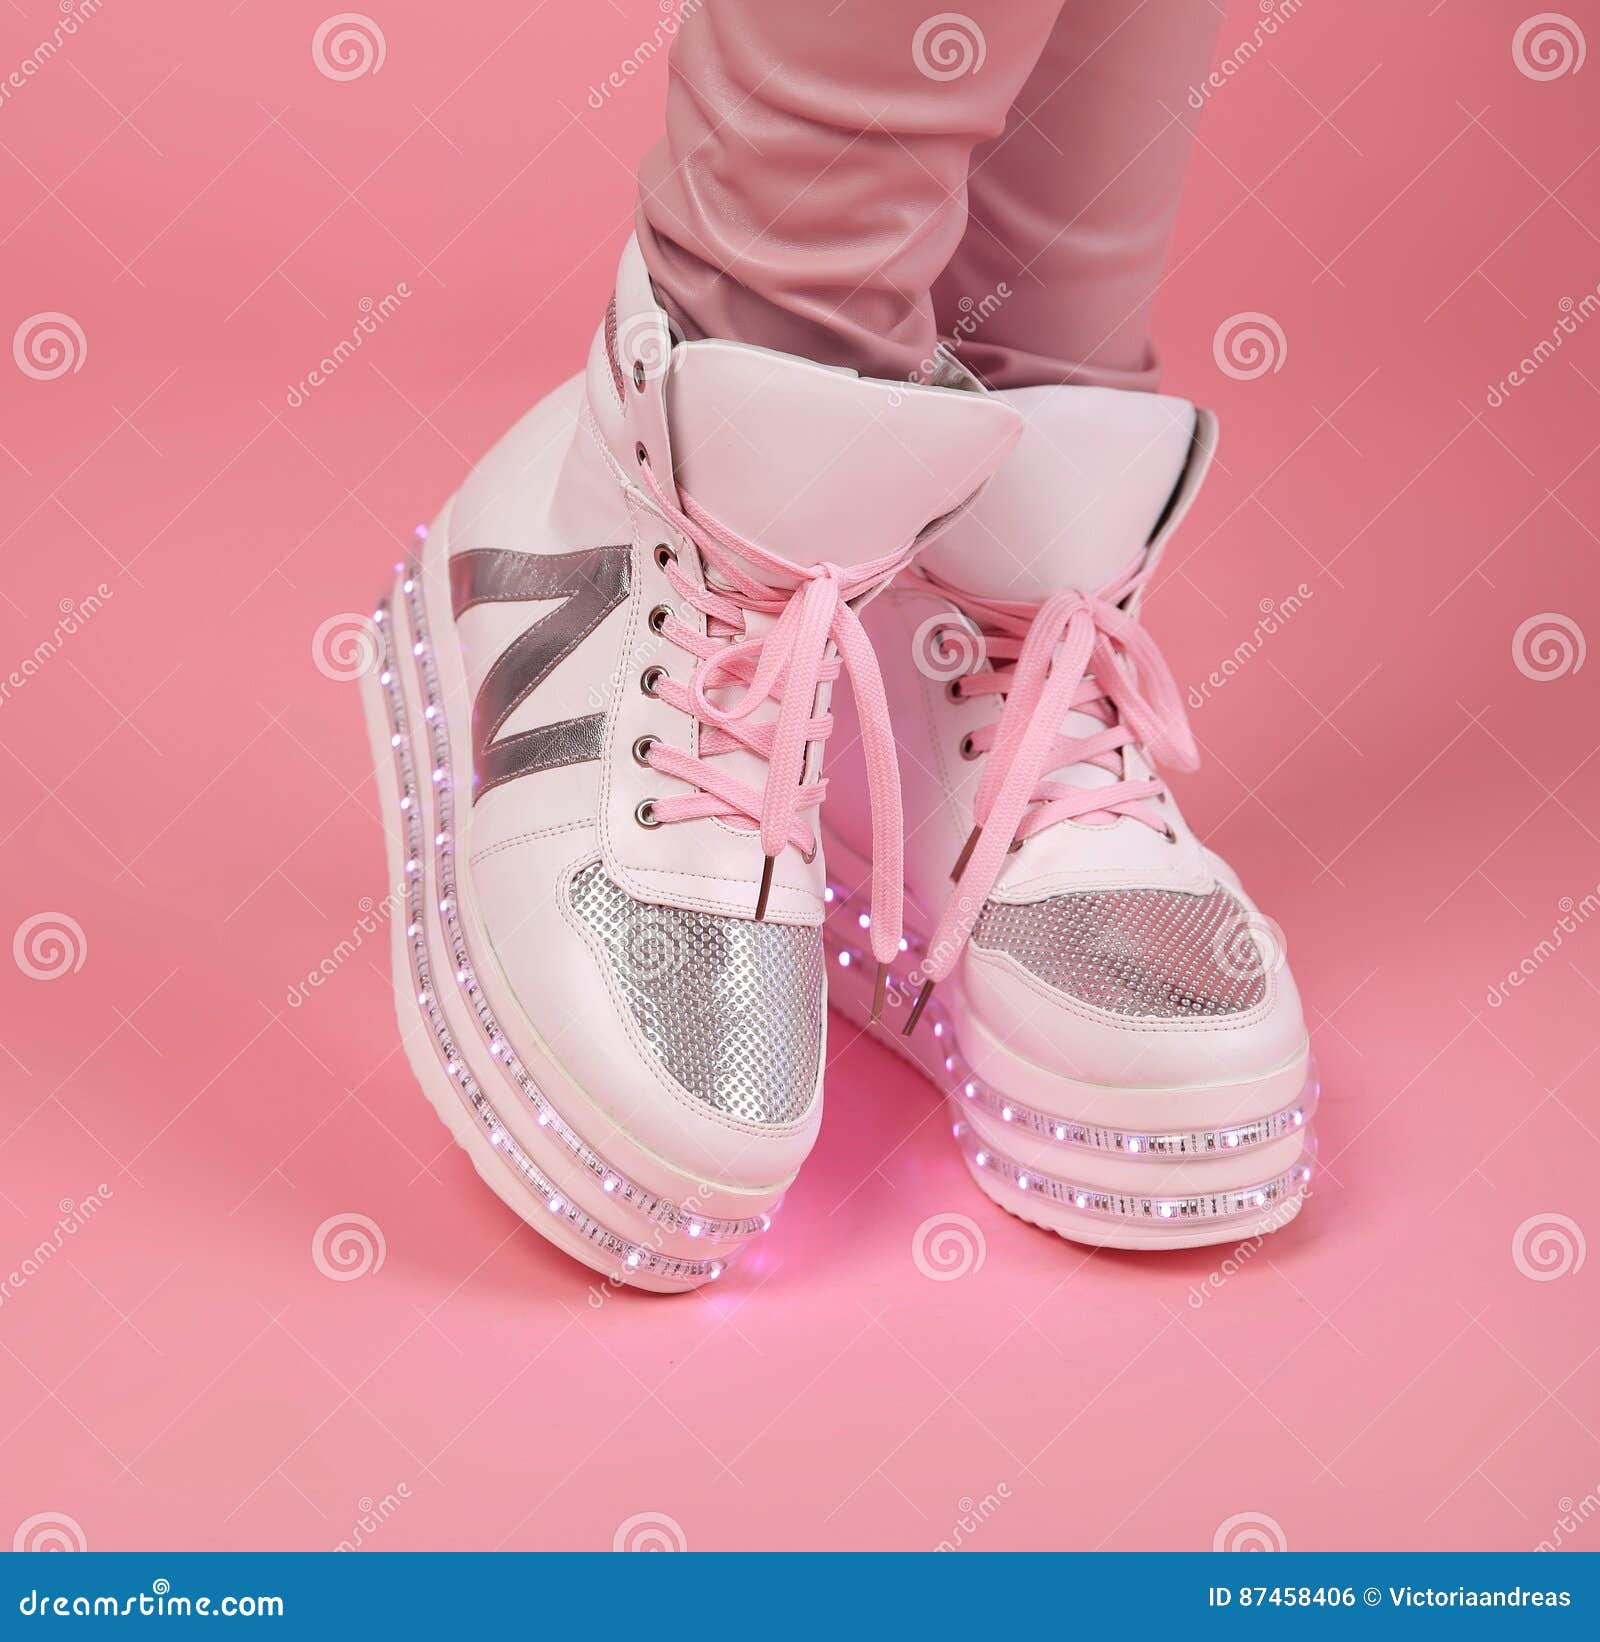 Flat Waxed Pink Shoelaces  Pink Flat Shoelaces  The Shoe Snob